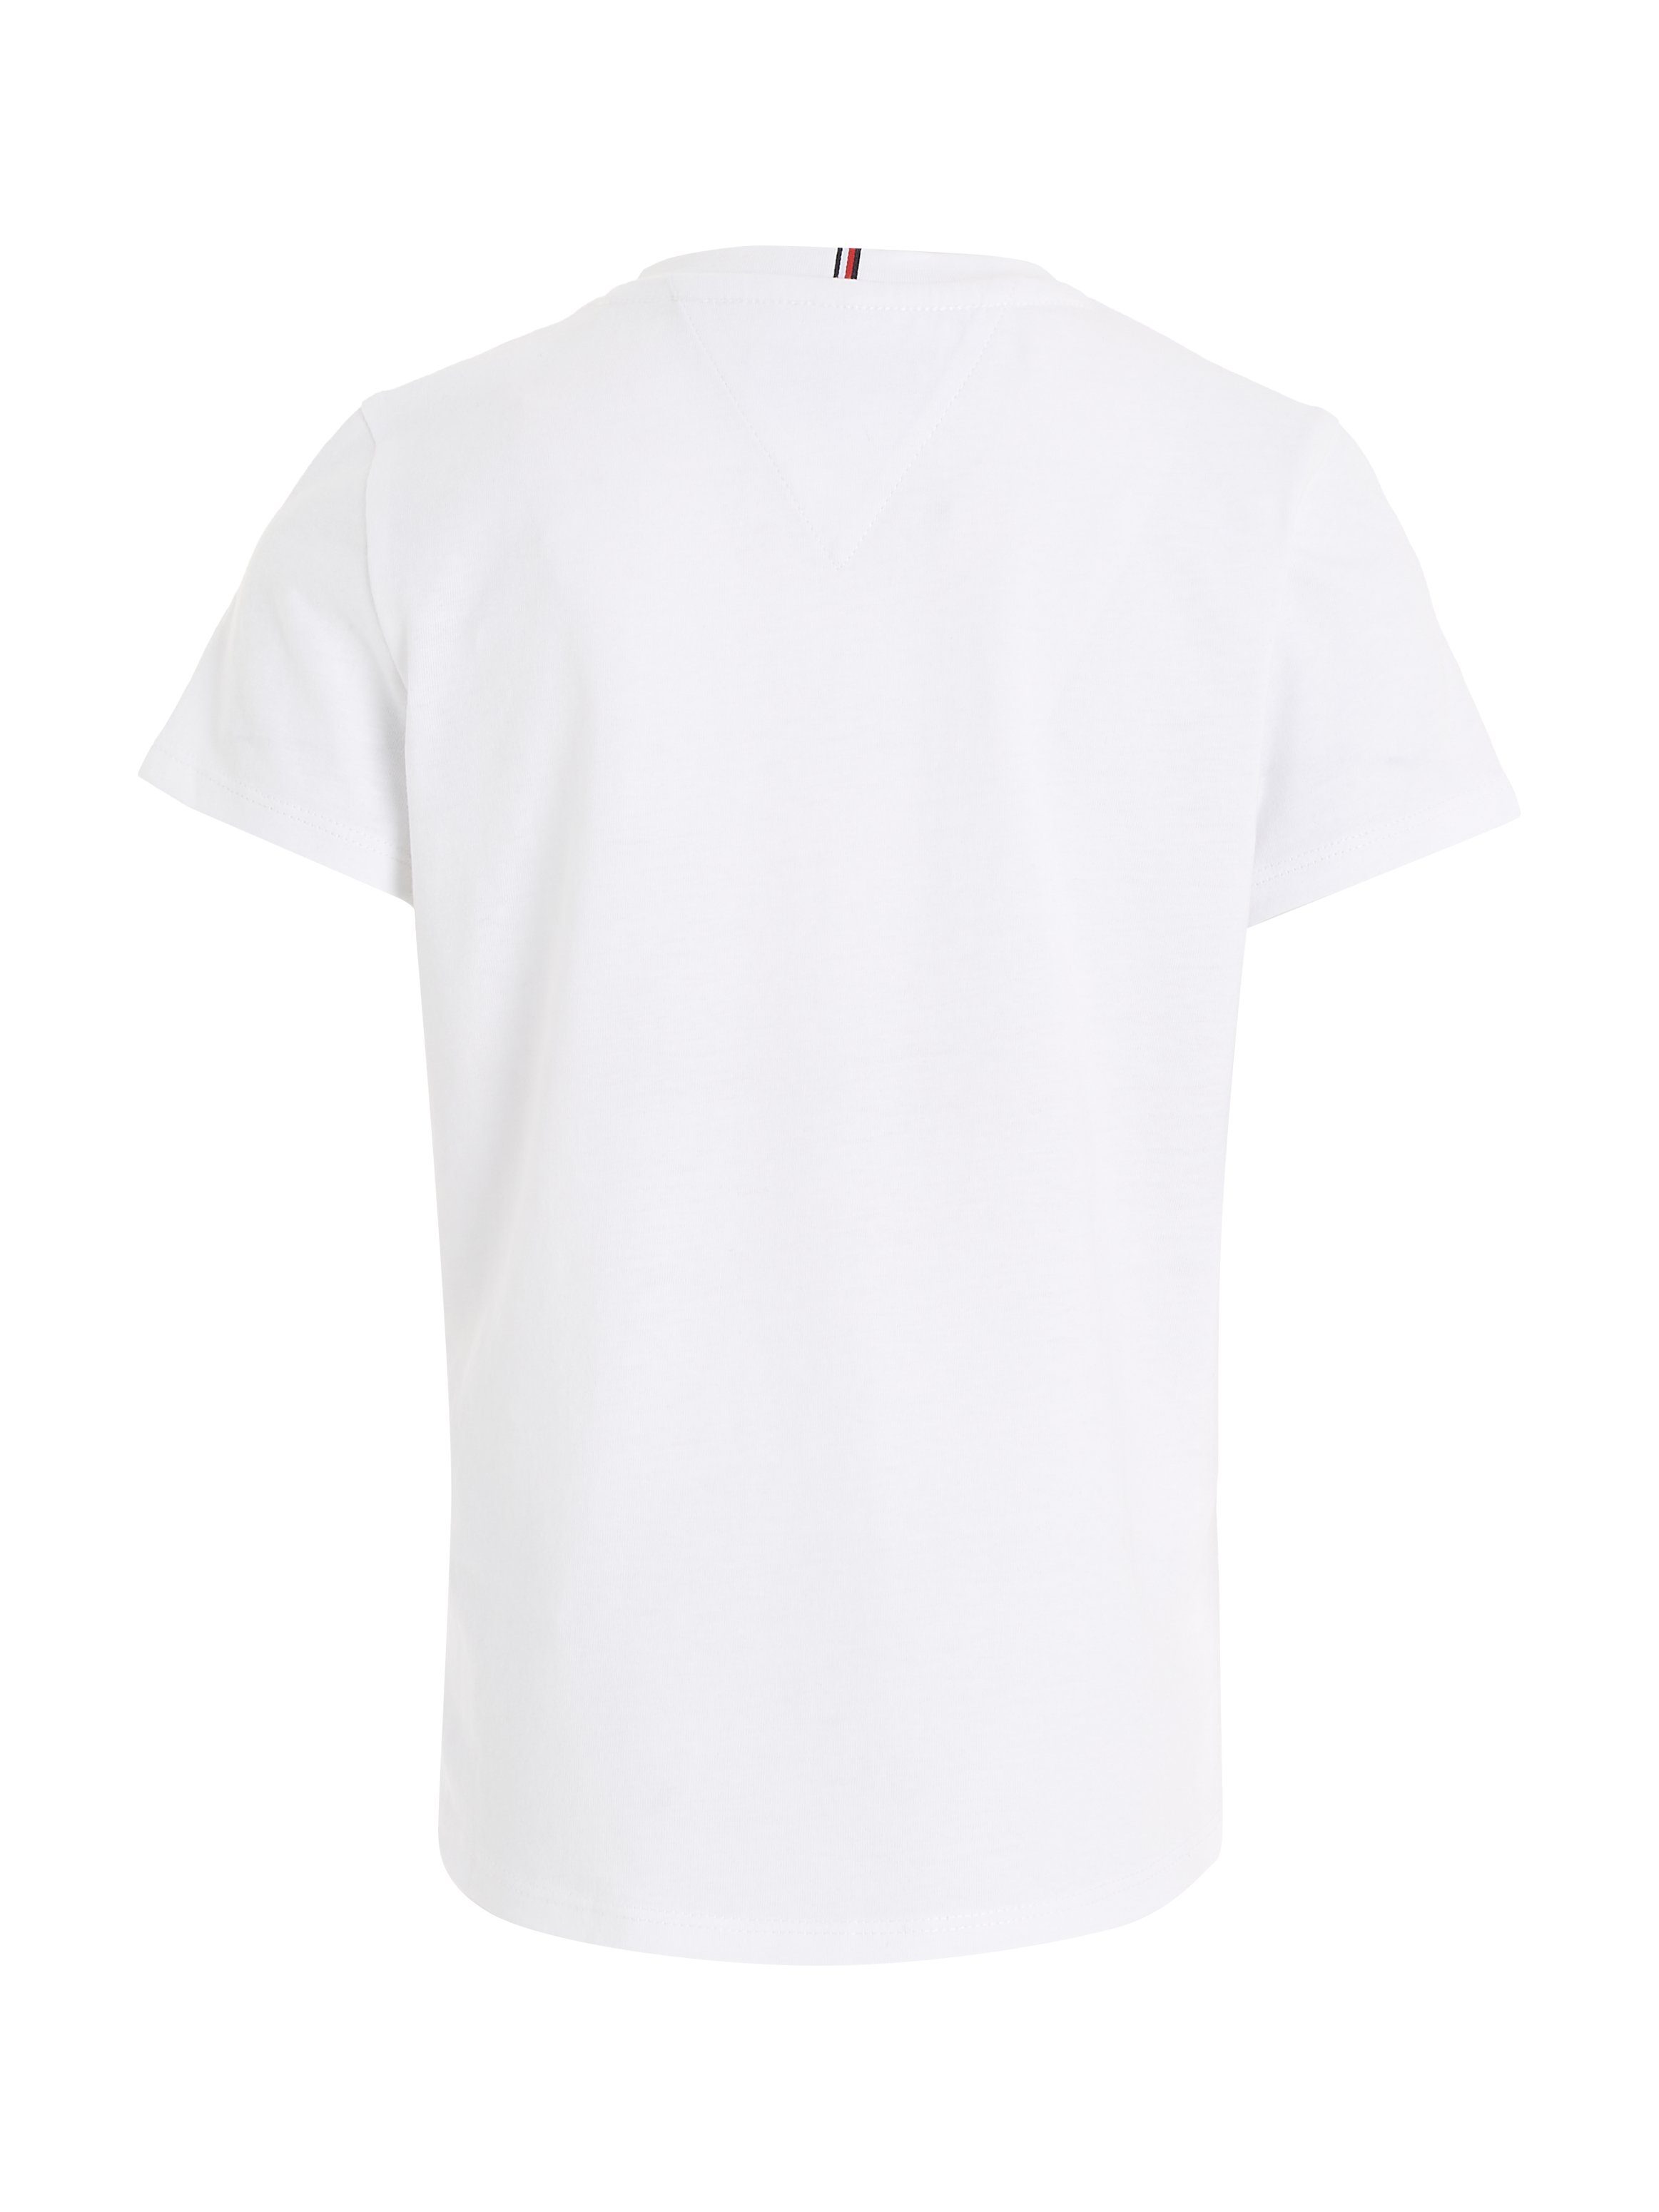 Tommy Hilfiger S/S SCRIPT white HILFIGER TEE T-Shirt